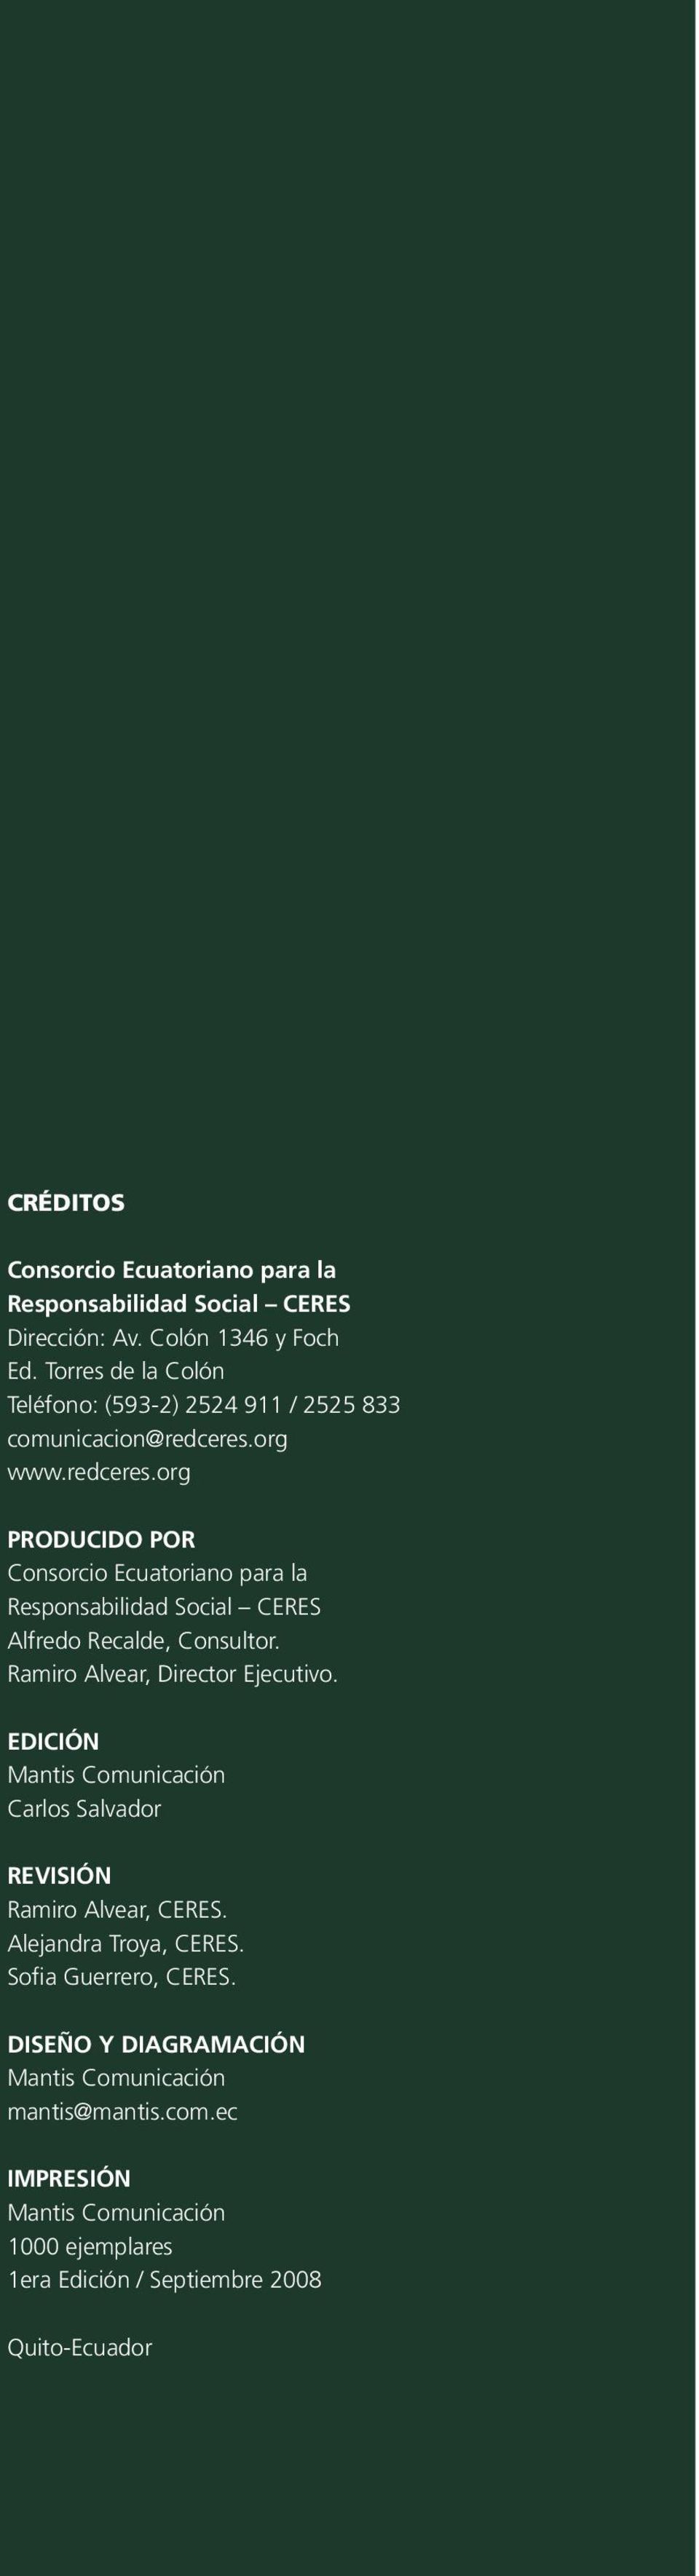 org www.redceres.org PRODUCIDO POR Consorcio Ecuatoriano para la Responsabilidad Social CERES Alfredo Recalde, Consultor.